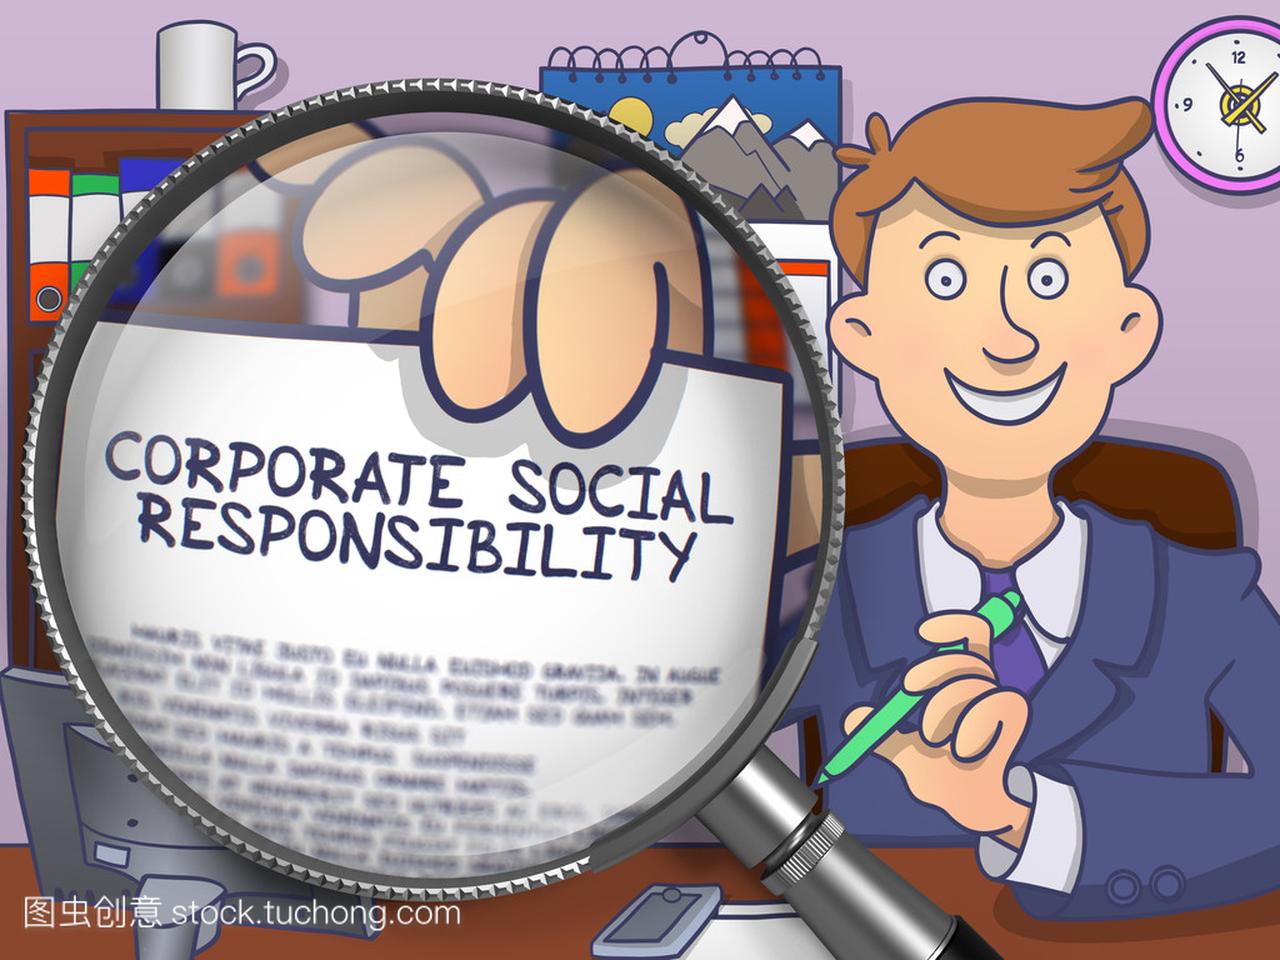 Corporate Social Responsibility through Magni